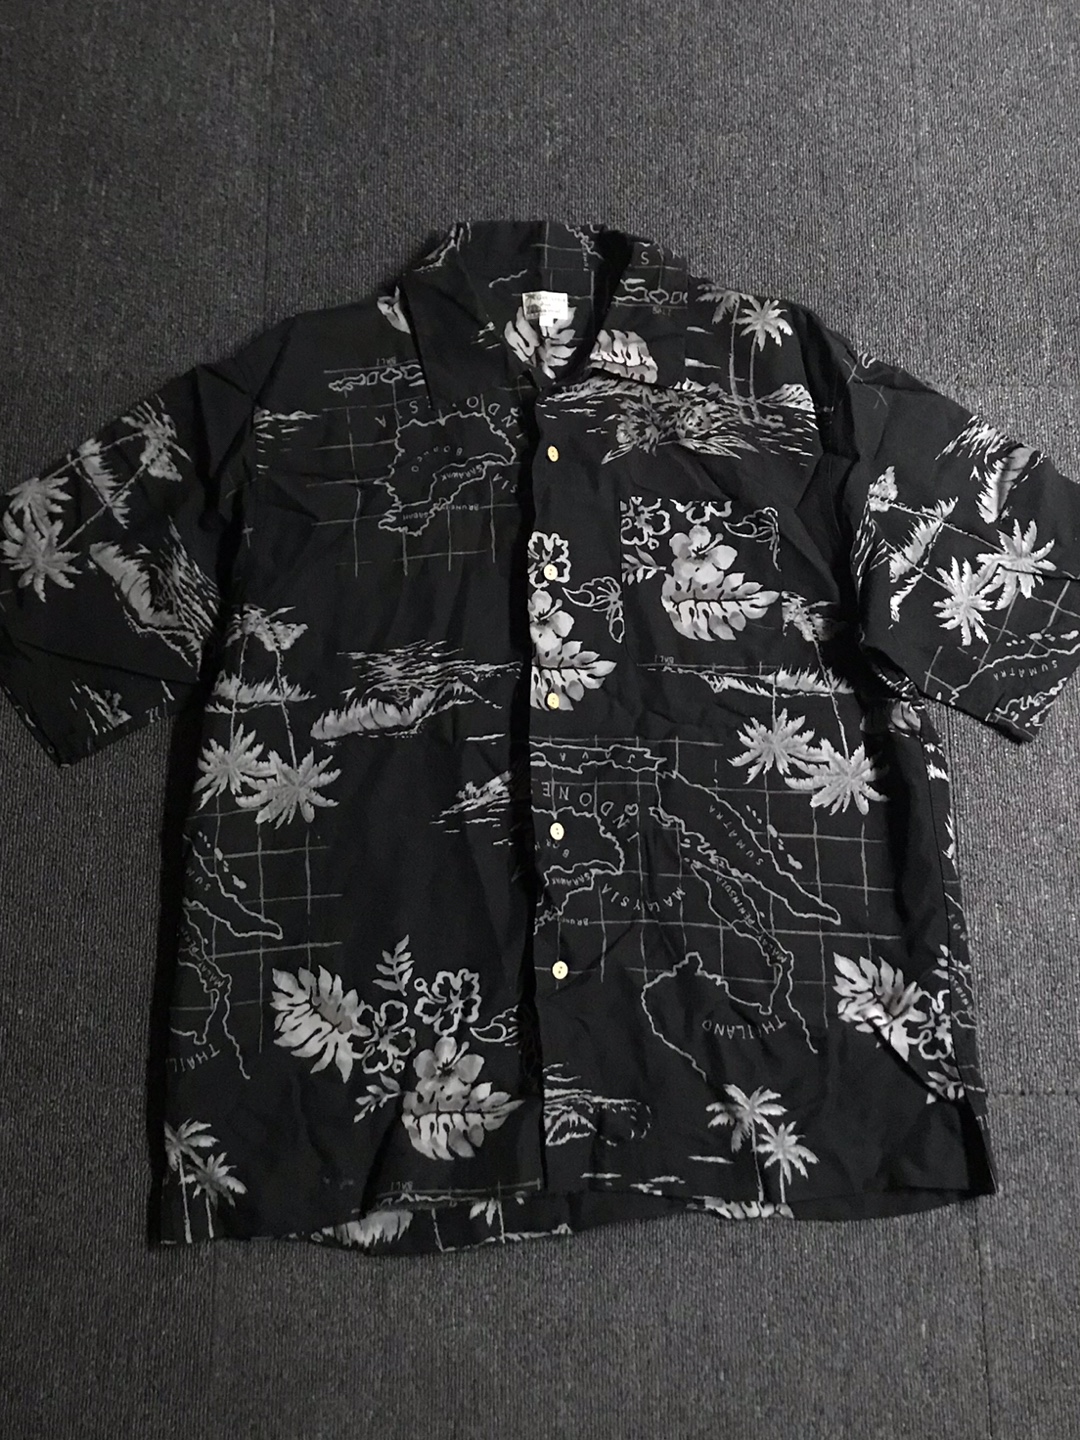 get arnie rayon/hemp hawaiian shirt (L size, ~103 추천)